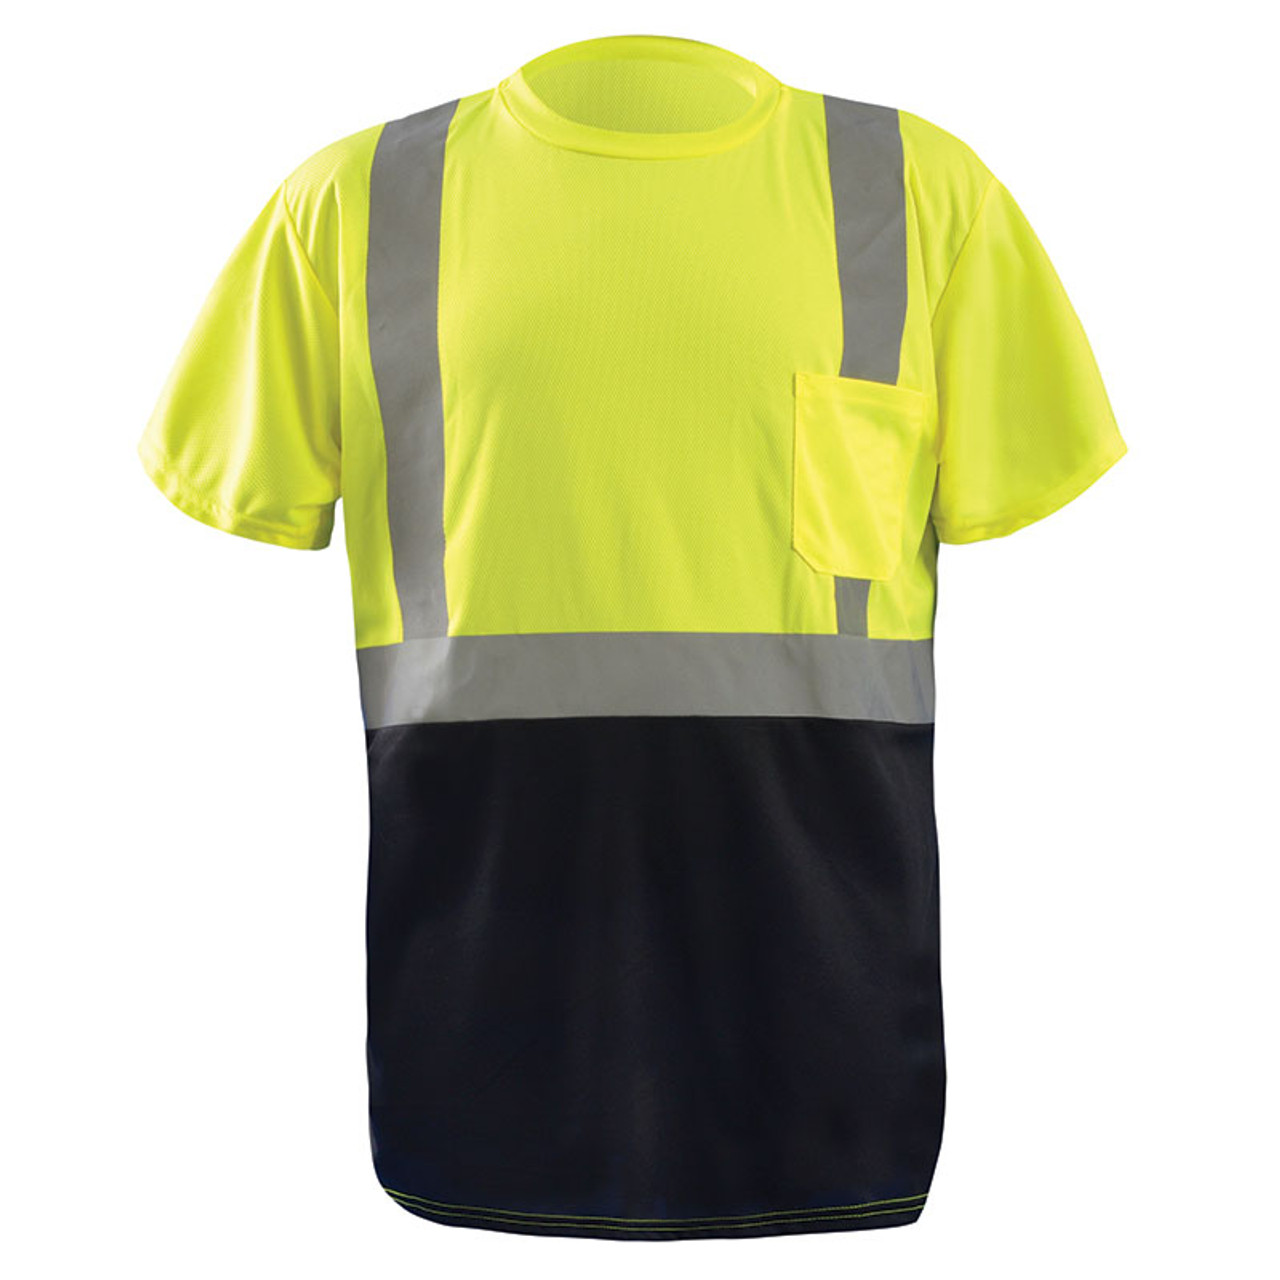 FONIRRA Hi Vis Safety T Shirts for Men ANSI Class 2 High Visibility Reflective Work Shirt with Short Sleeve Black Bottom 